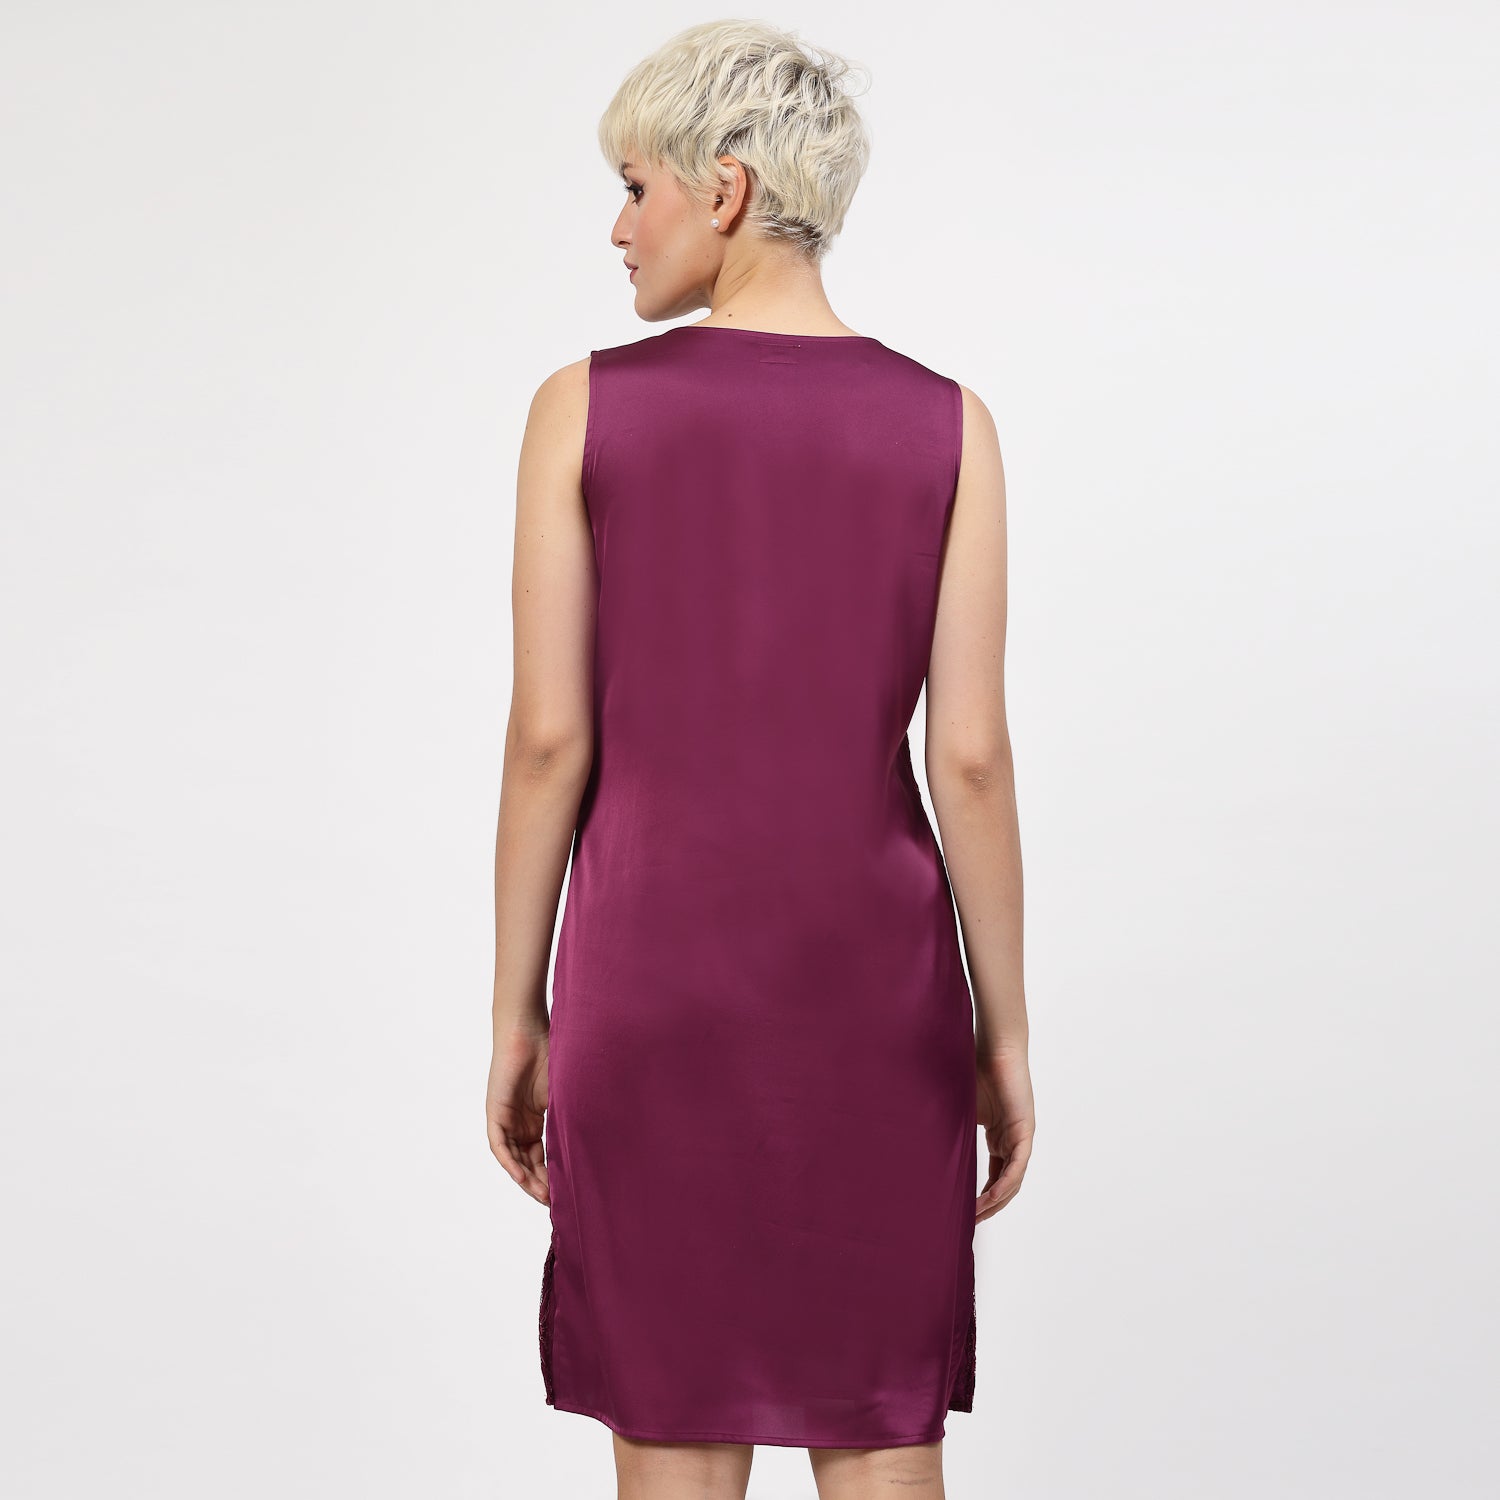 Purple Sleeveless Dress With Lace Fabric